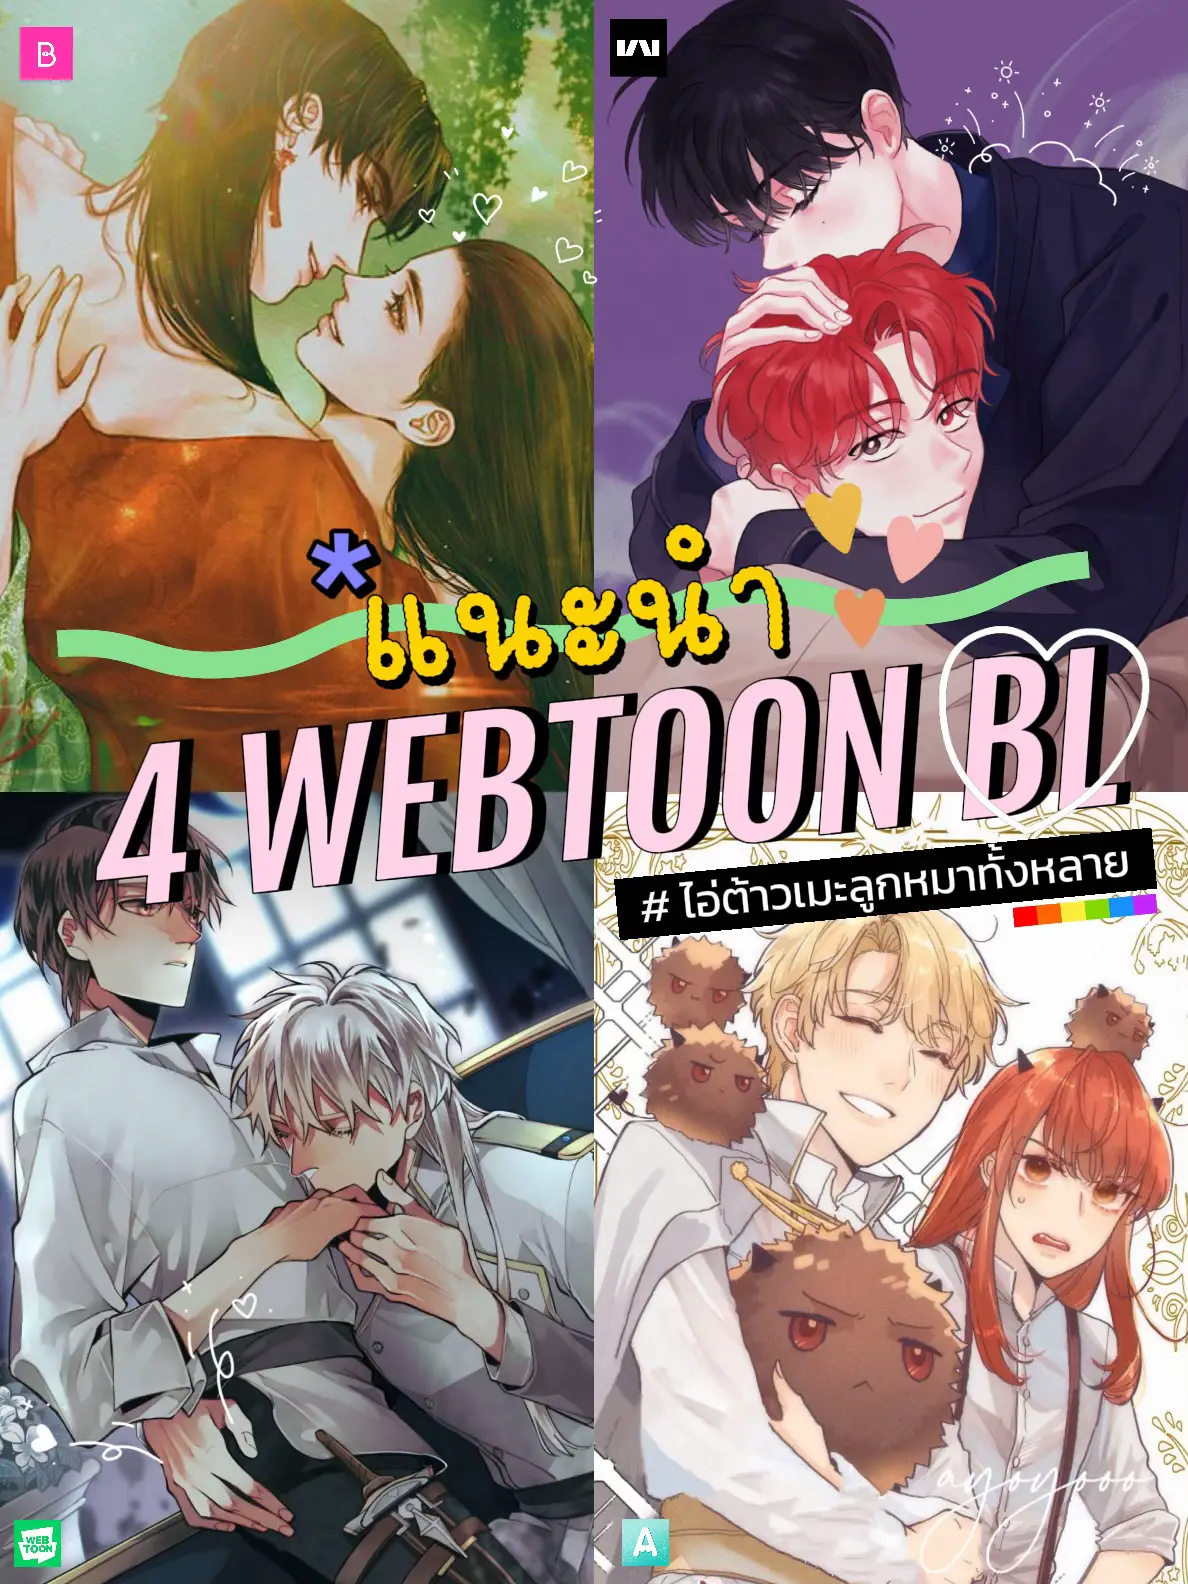 Gamer..Webtoon  Webtoon, Anime comics, Bl comics